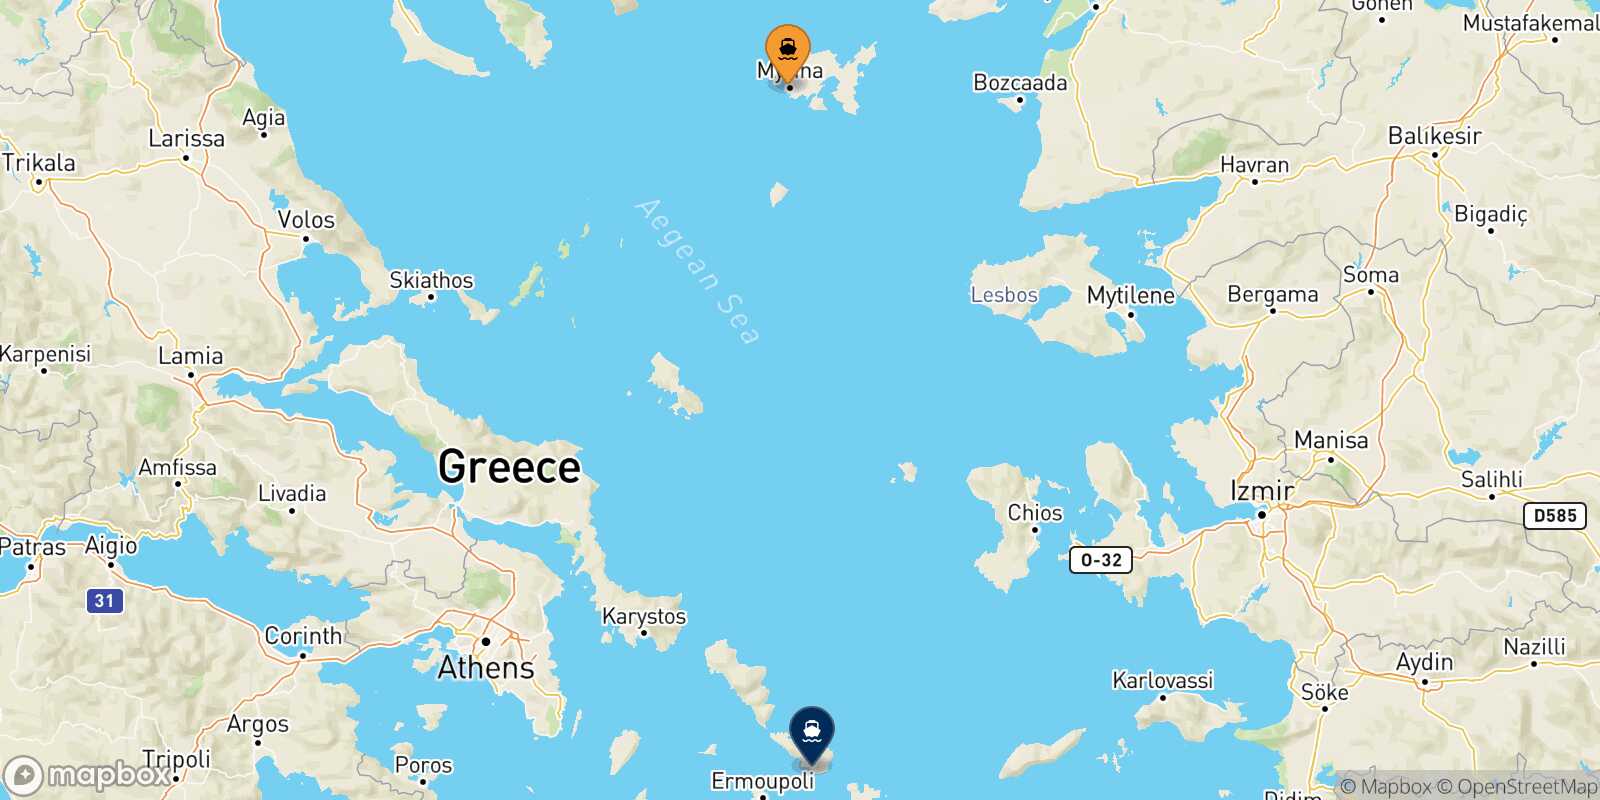 Myrina (Limnos) Tinos route map